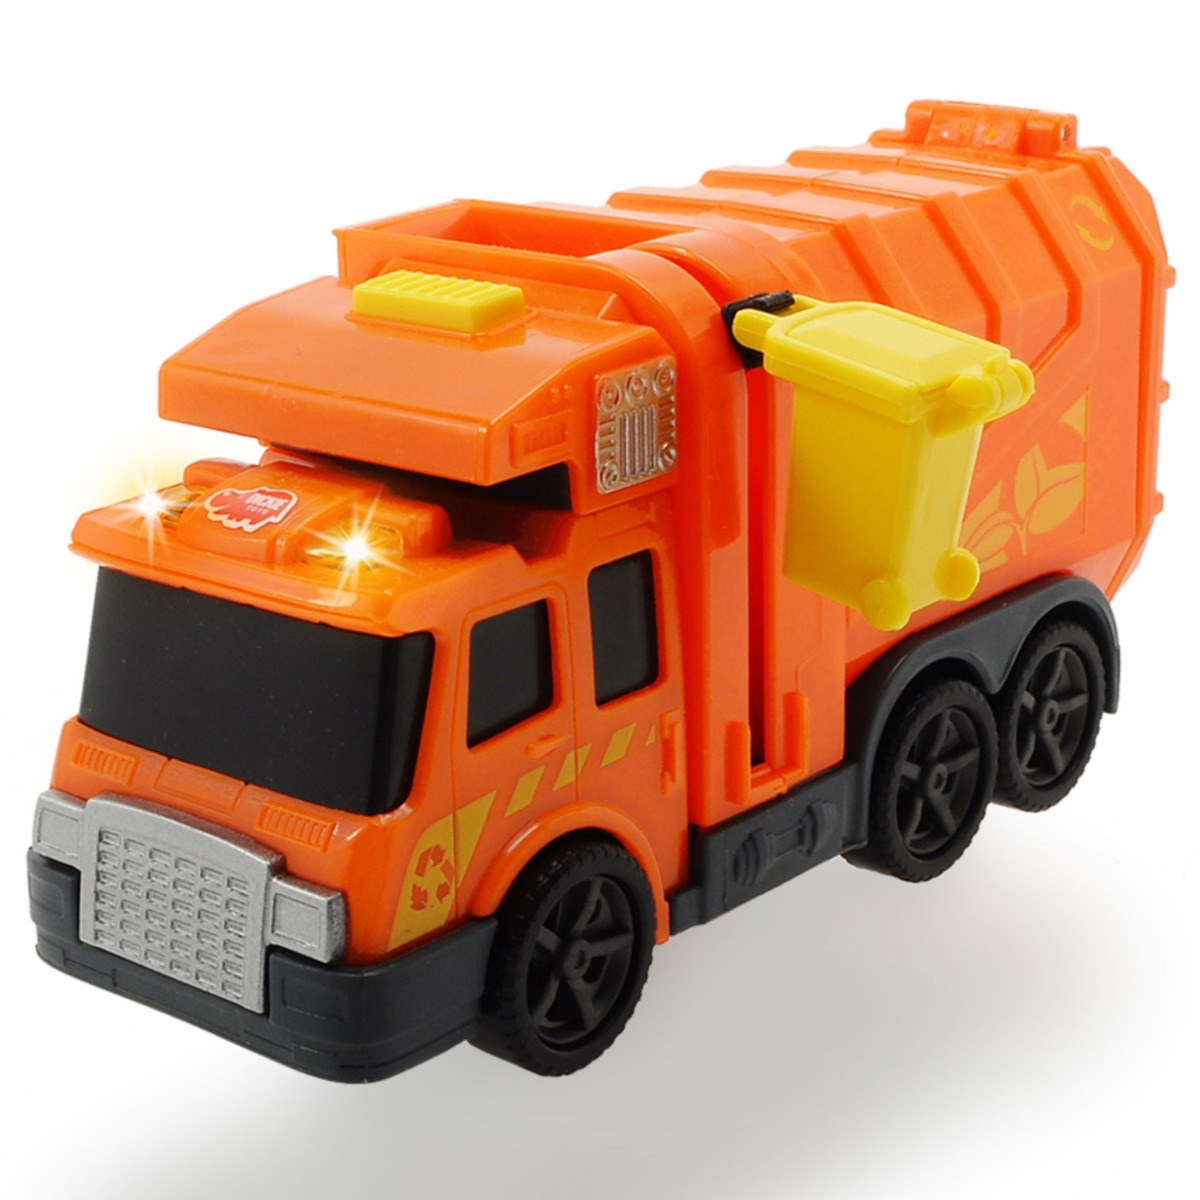 Masina de gunoi Dickie Toys Mini Action Series City Cleaner portocaliu image 2